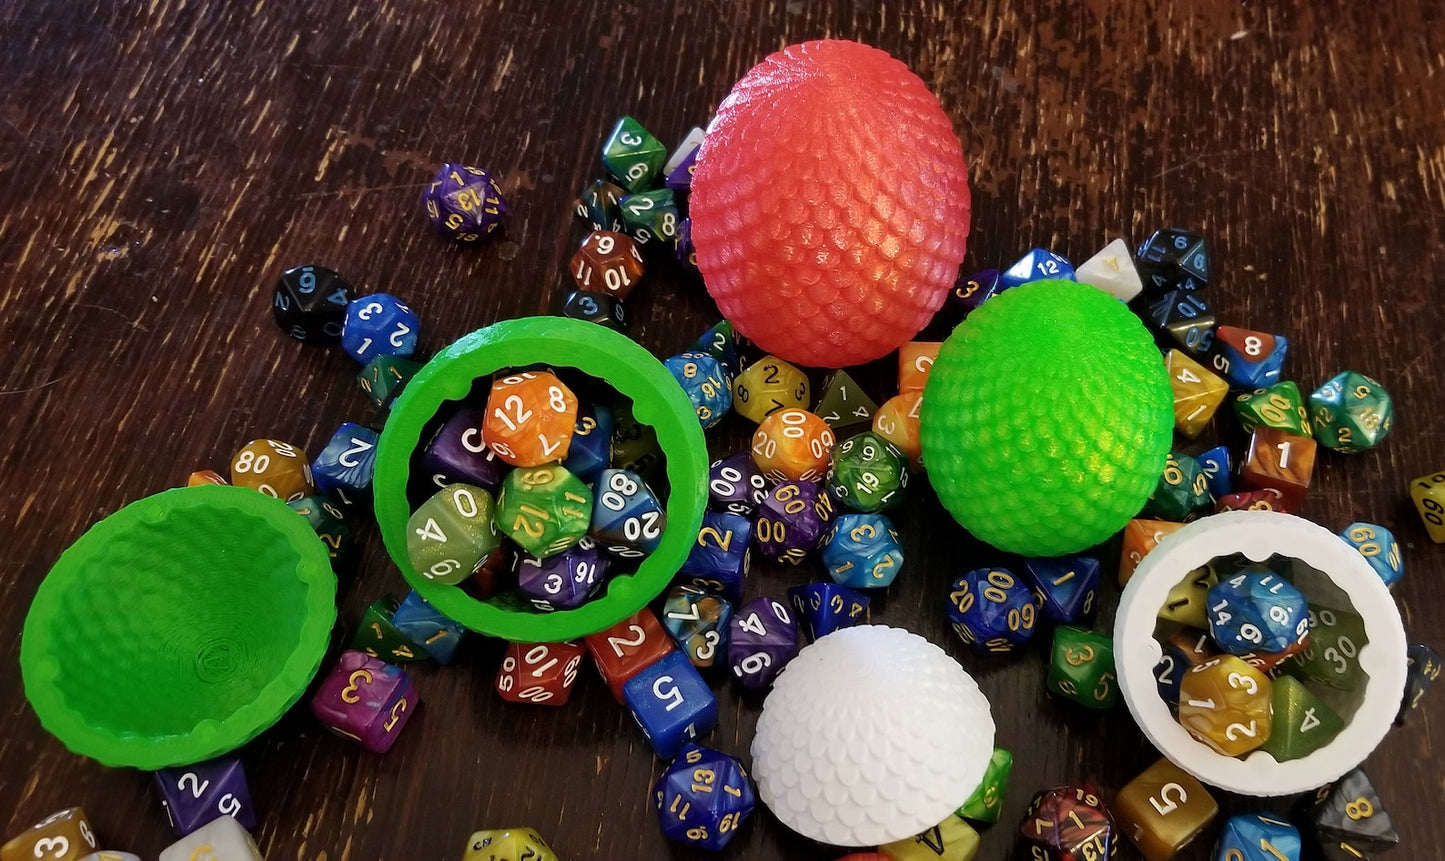 Dragon Egg Dice Box (Give away a random dice set)